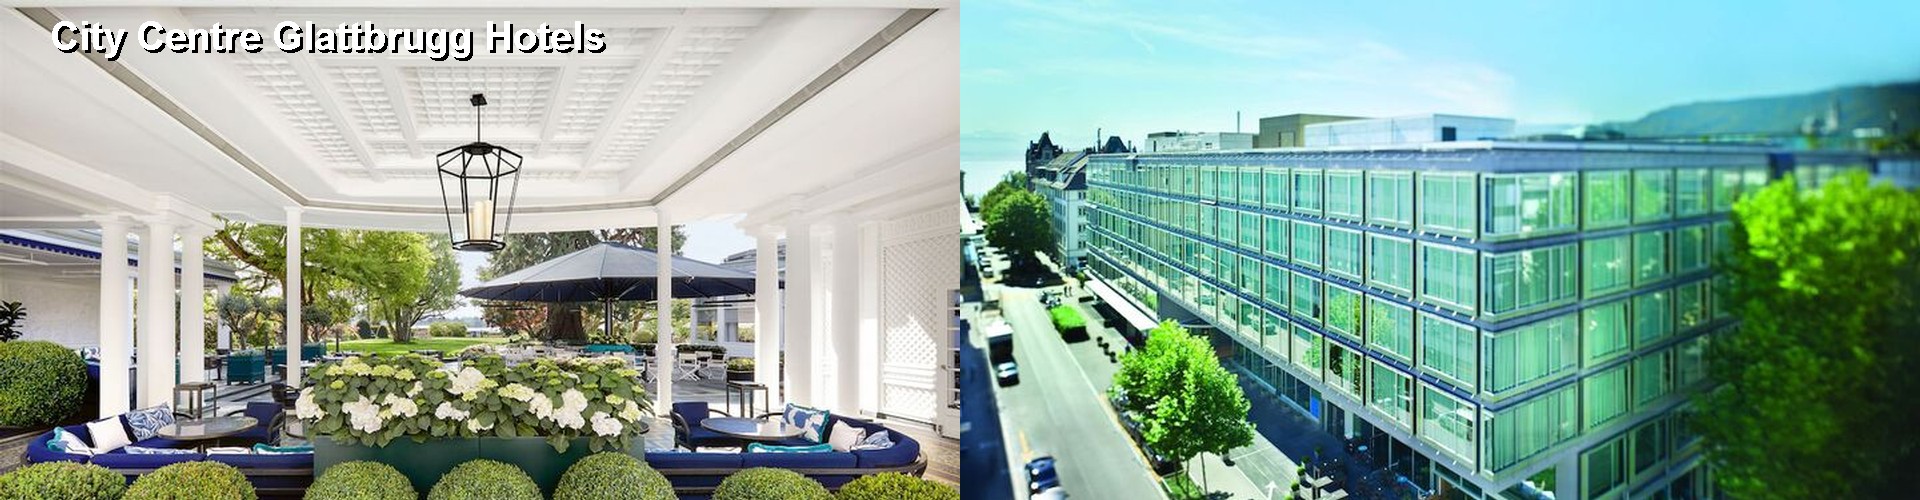 5 Best Hotels near City Centre Glattbrugg